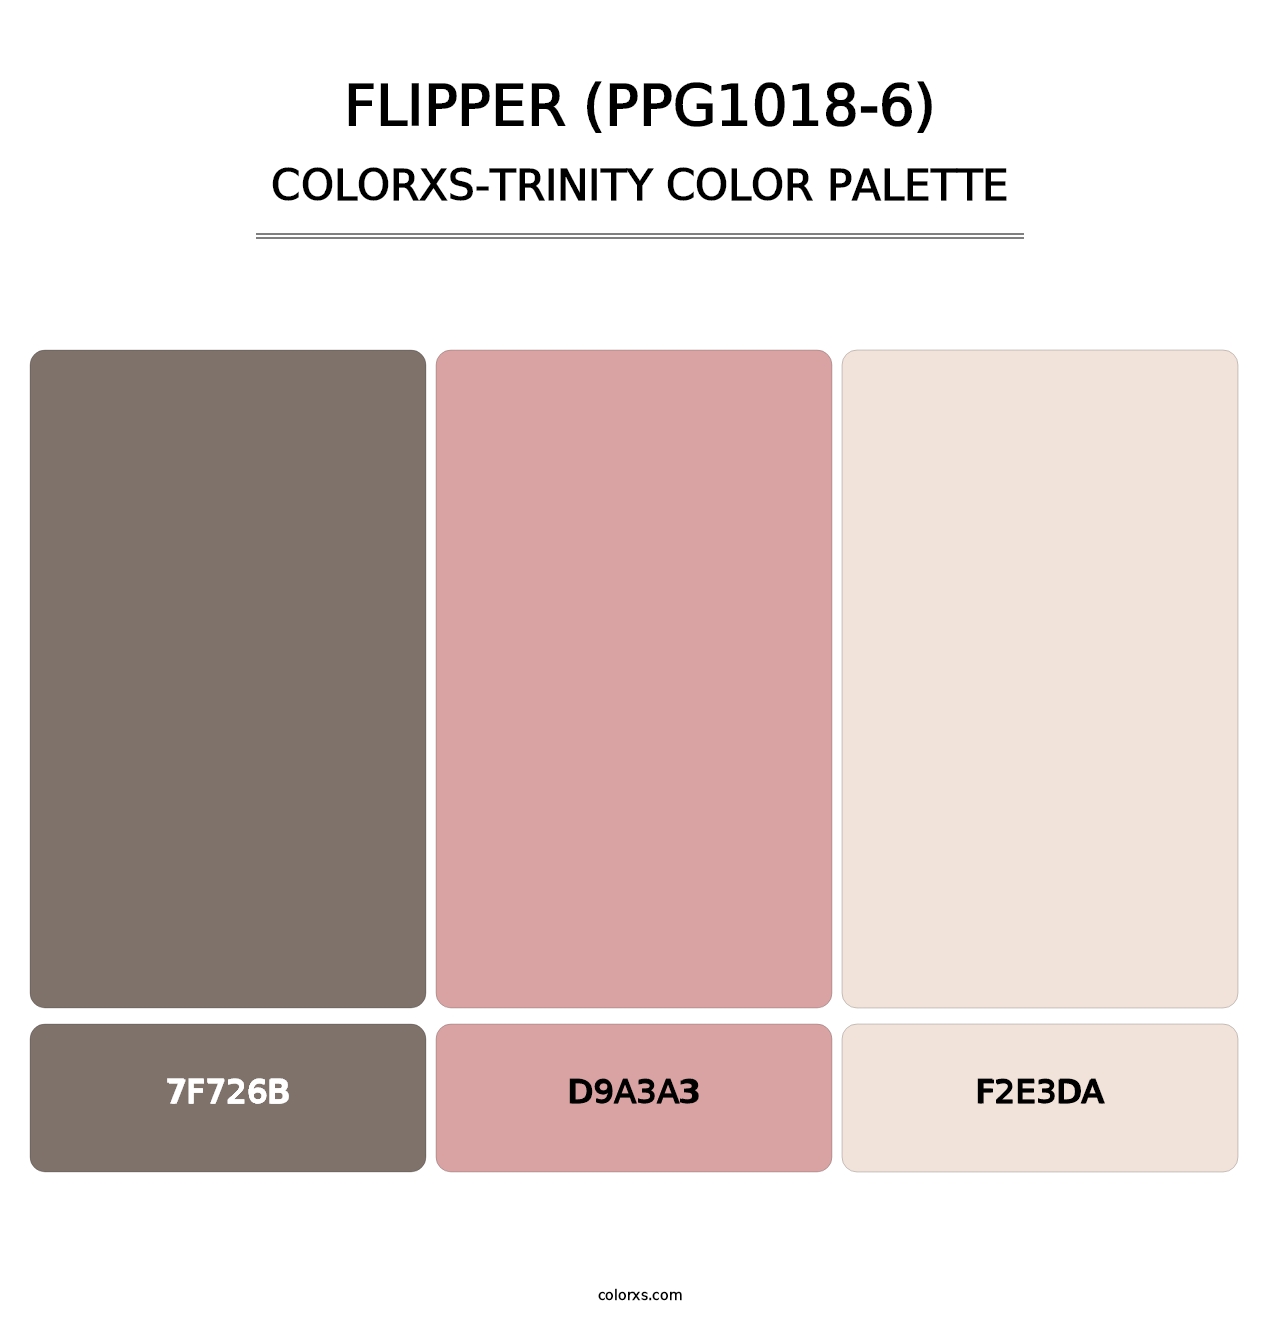 Flipper (PPG1018-6) - Colorxs Trinity Palette